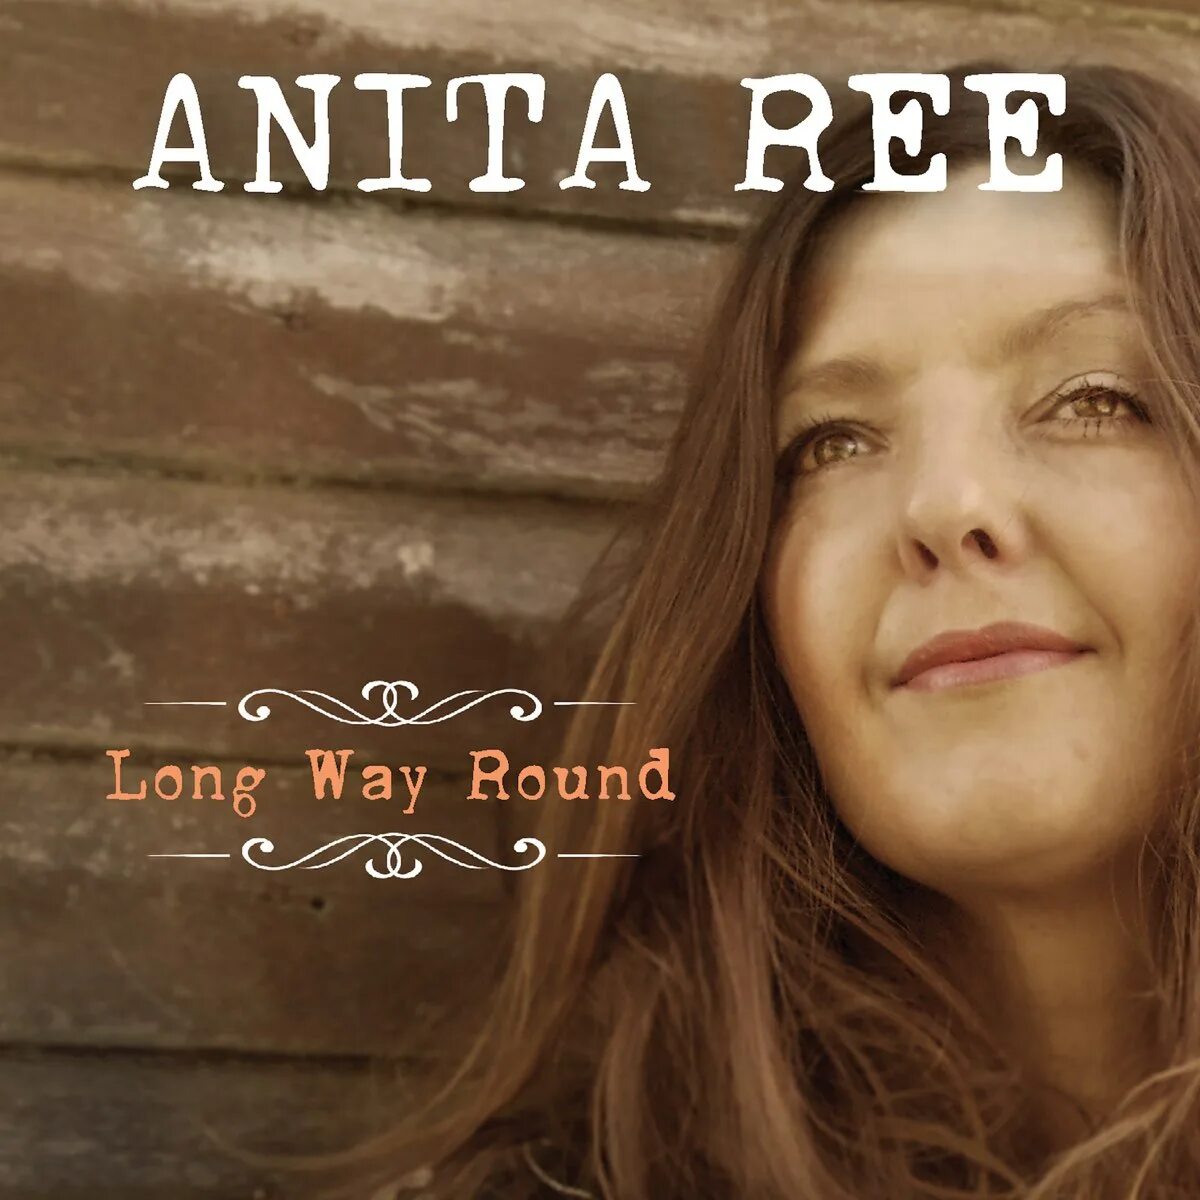 Anita ree. Anita rounded. The other way round